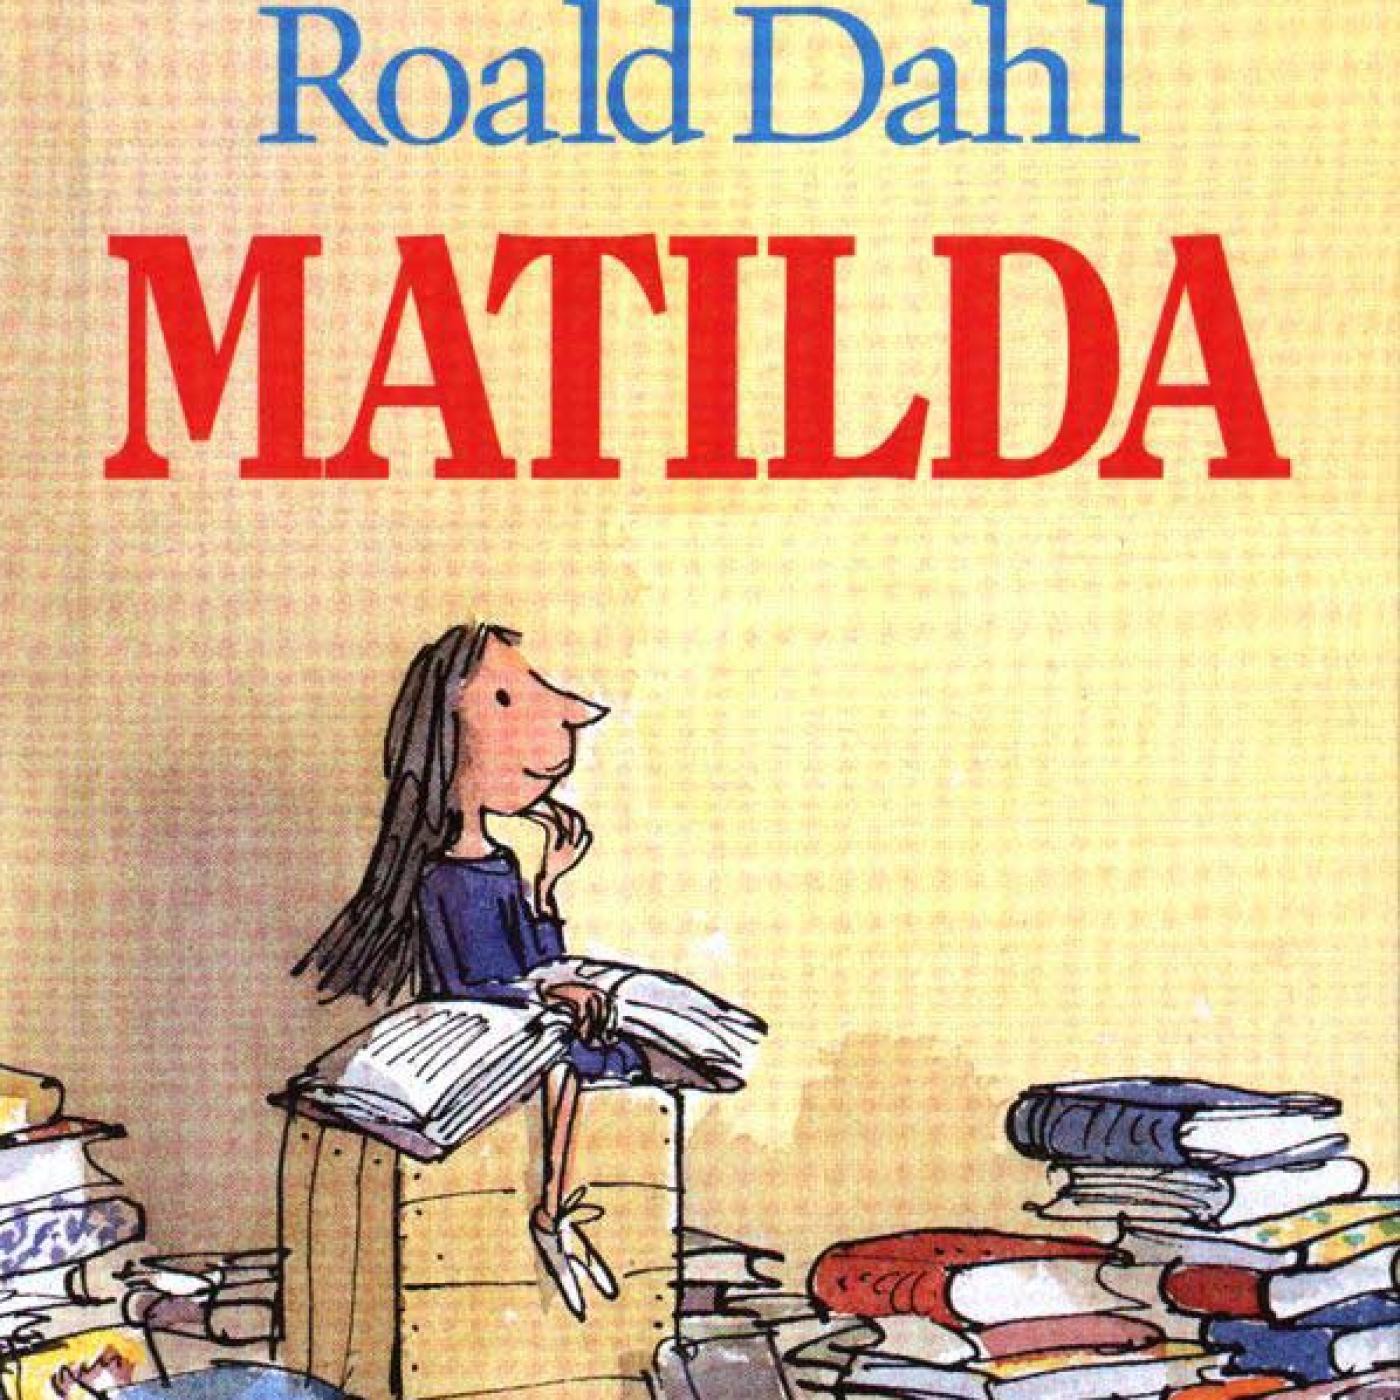 Roald dahl s matilda. Dahl Roald "Matilda".